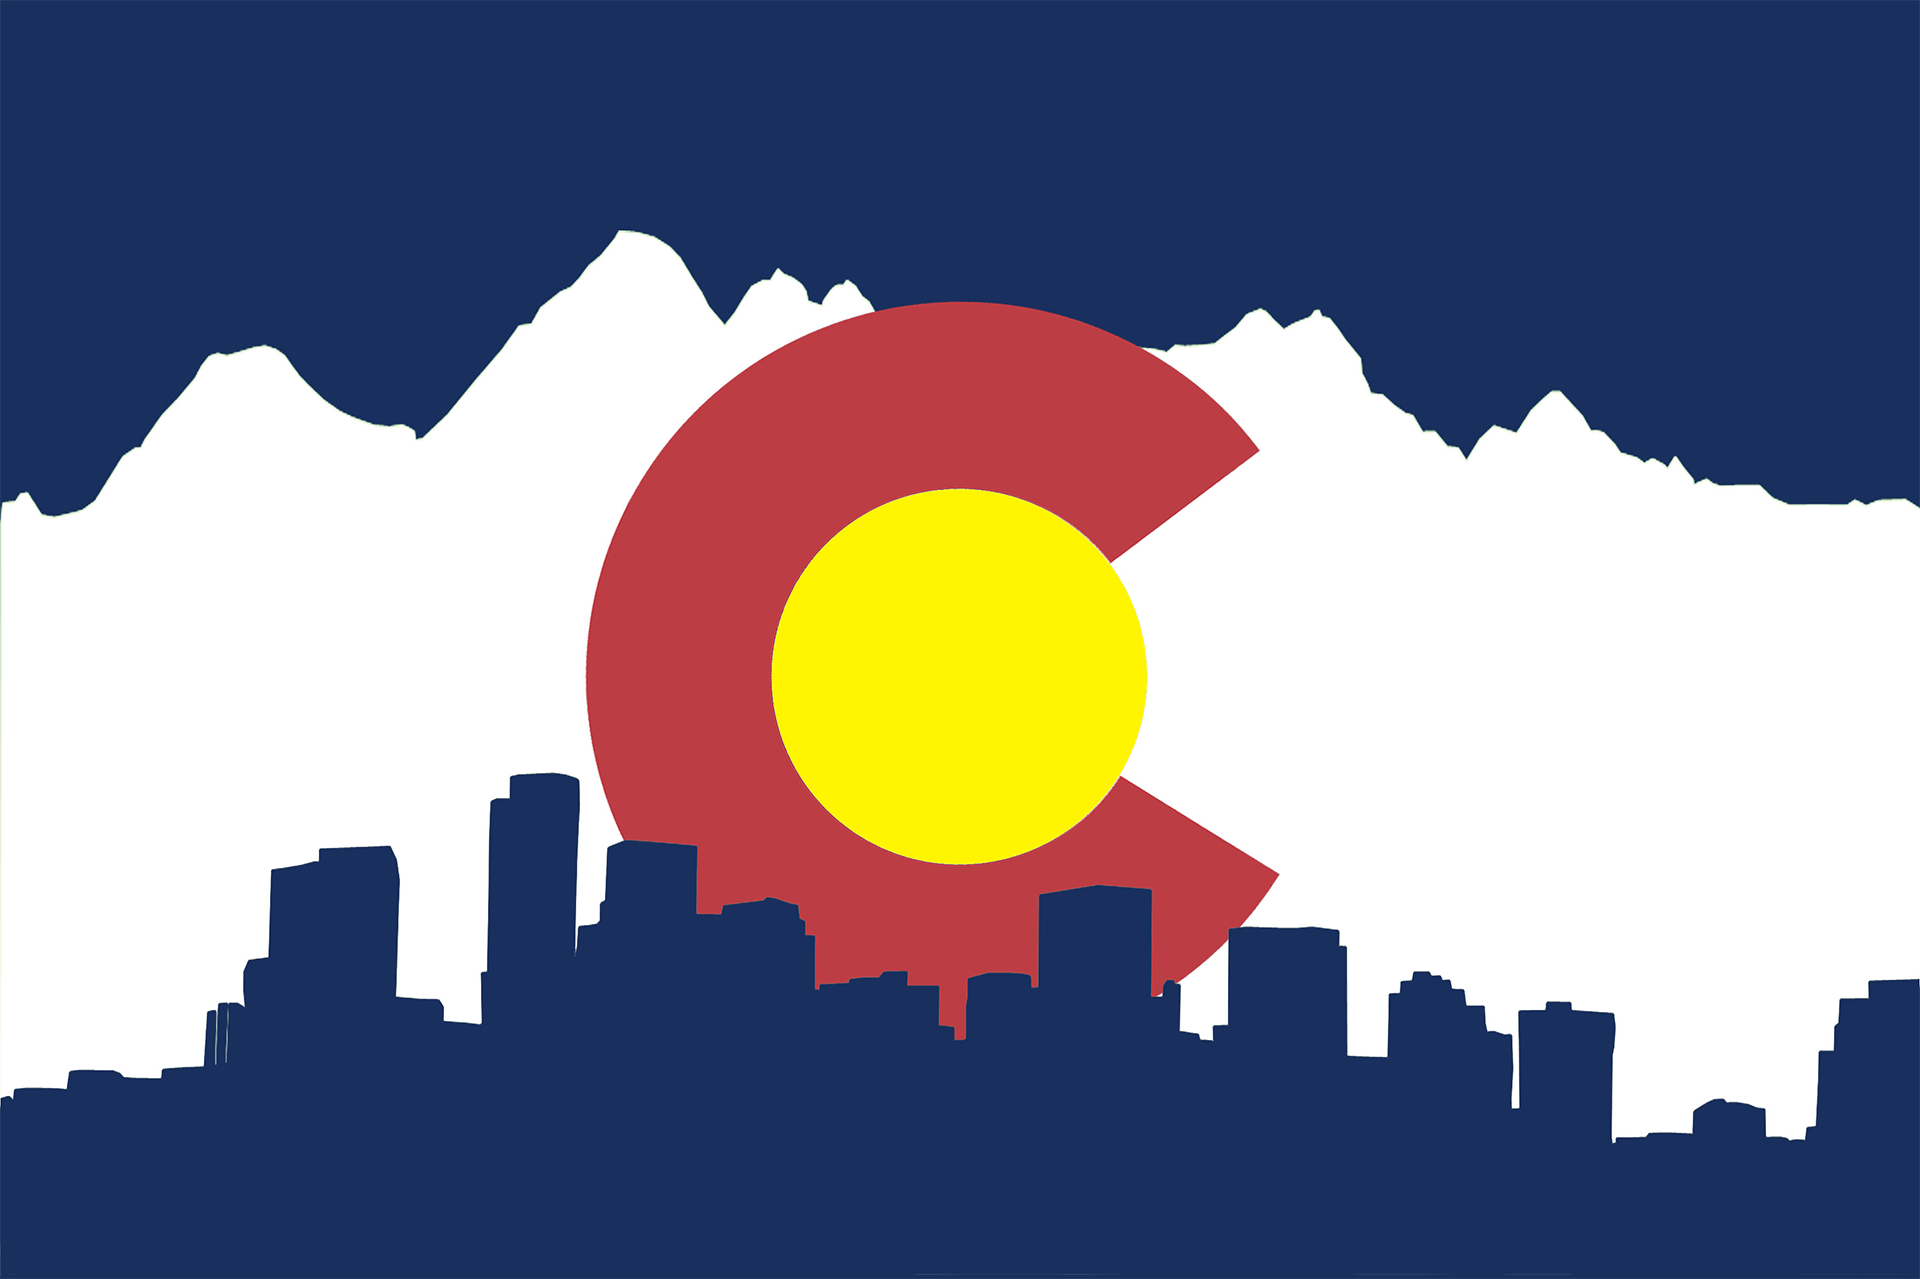 Colorado Flag I designed (x-post from r/wallpapers) : Colorado